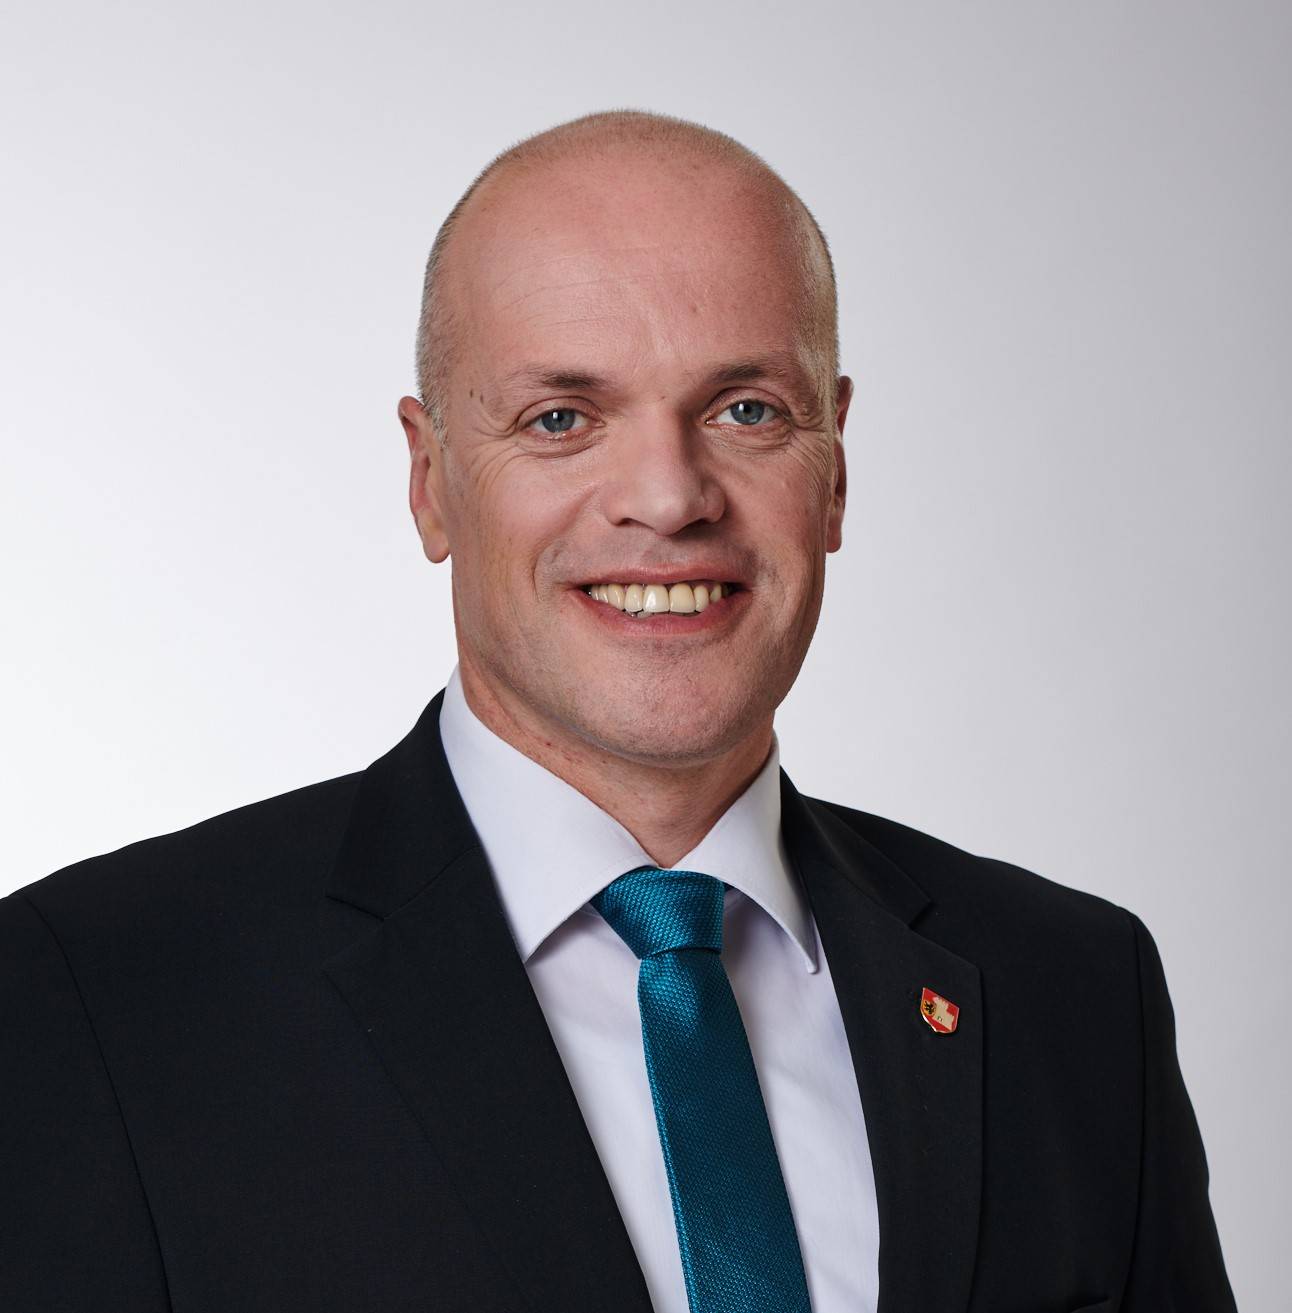 Bürgermeister Klaus Krützen will die Bürger